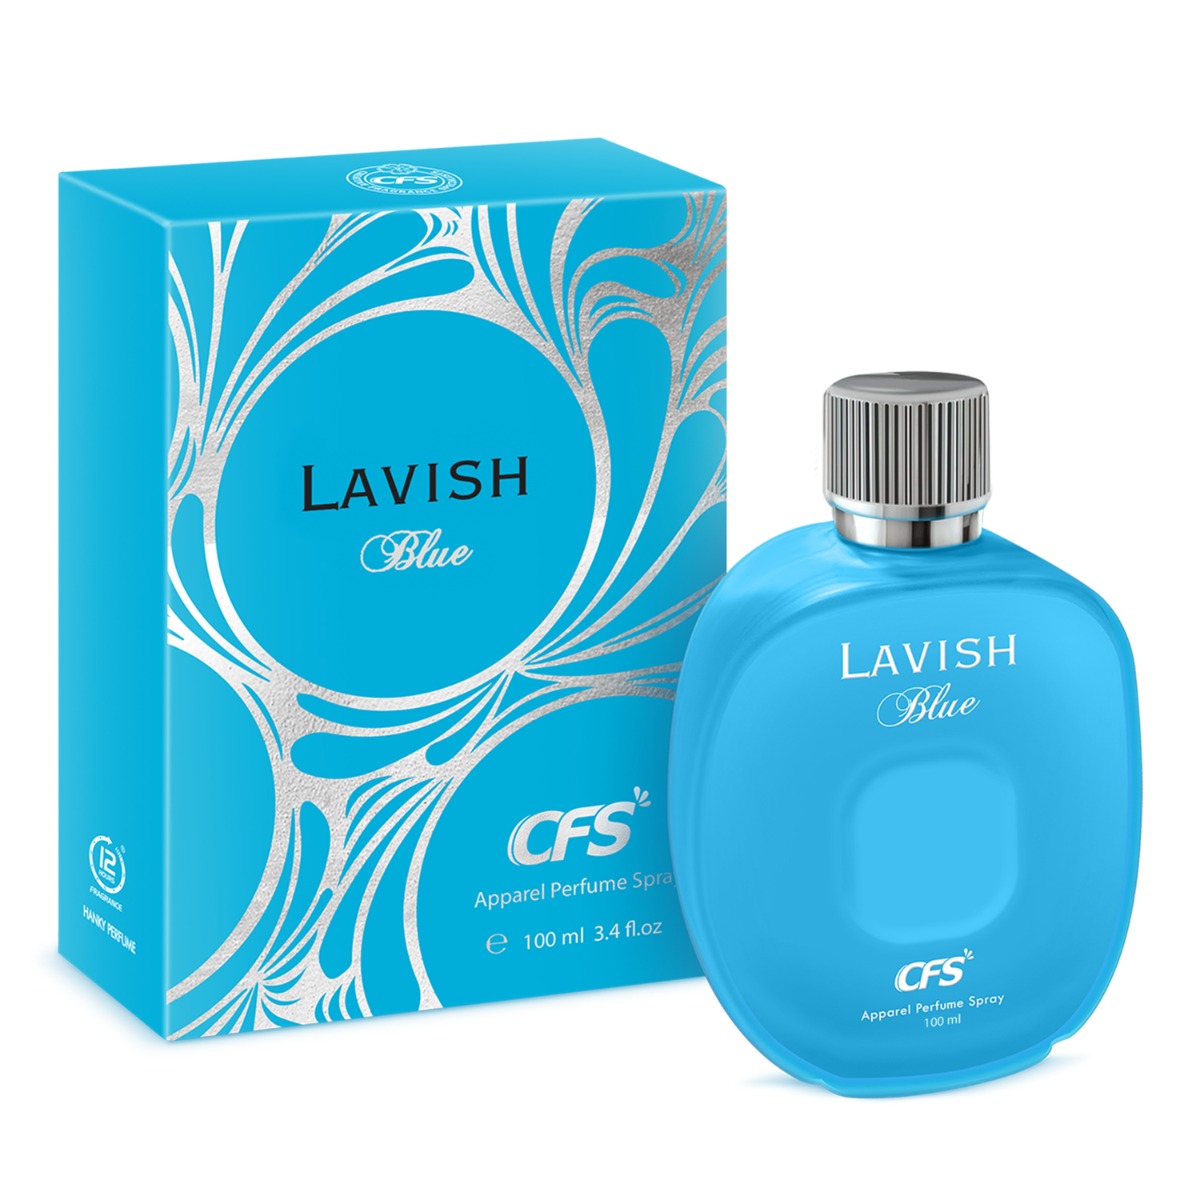 CFS Lavish Blue Long Lasting Apparel Perfume Spray, 100ml